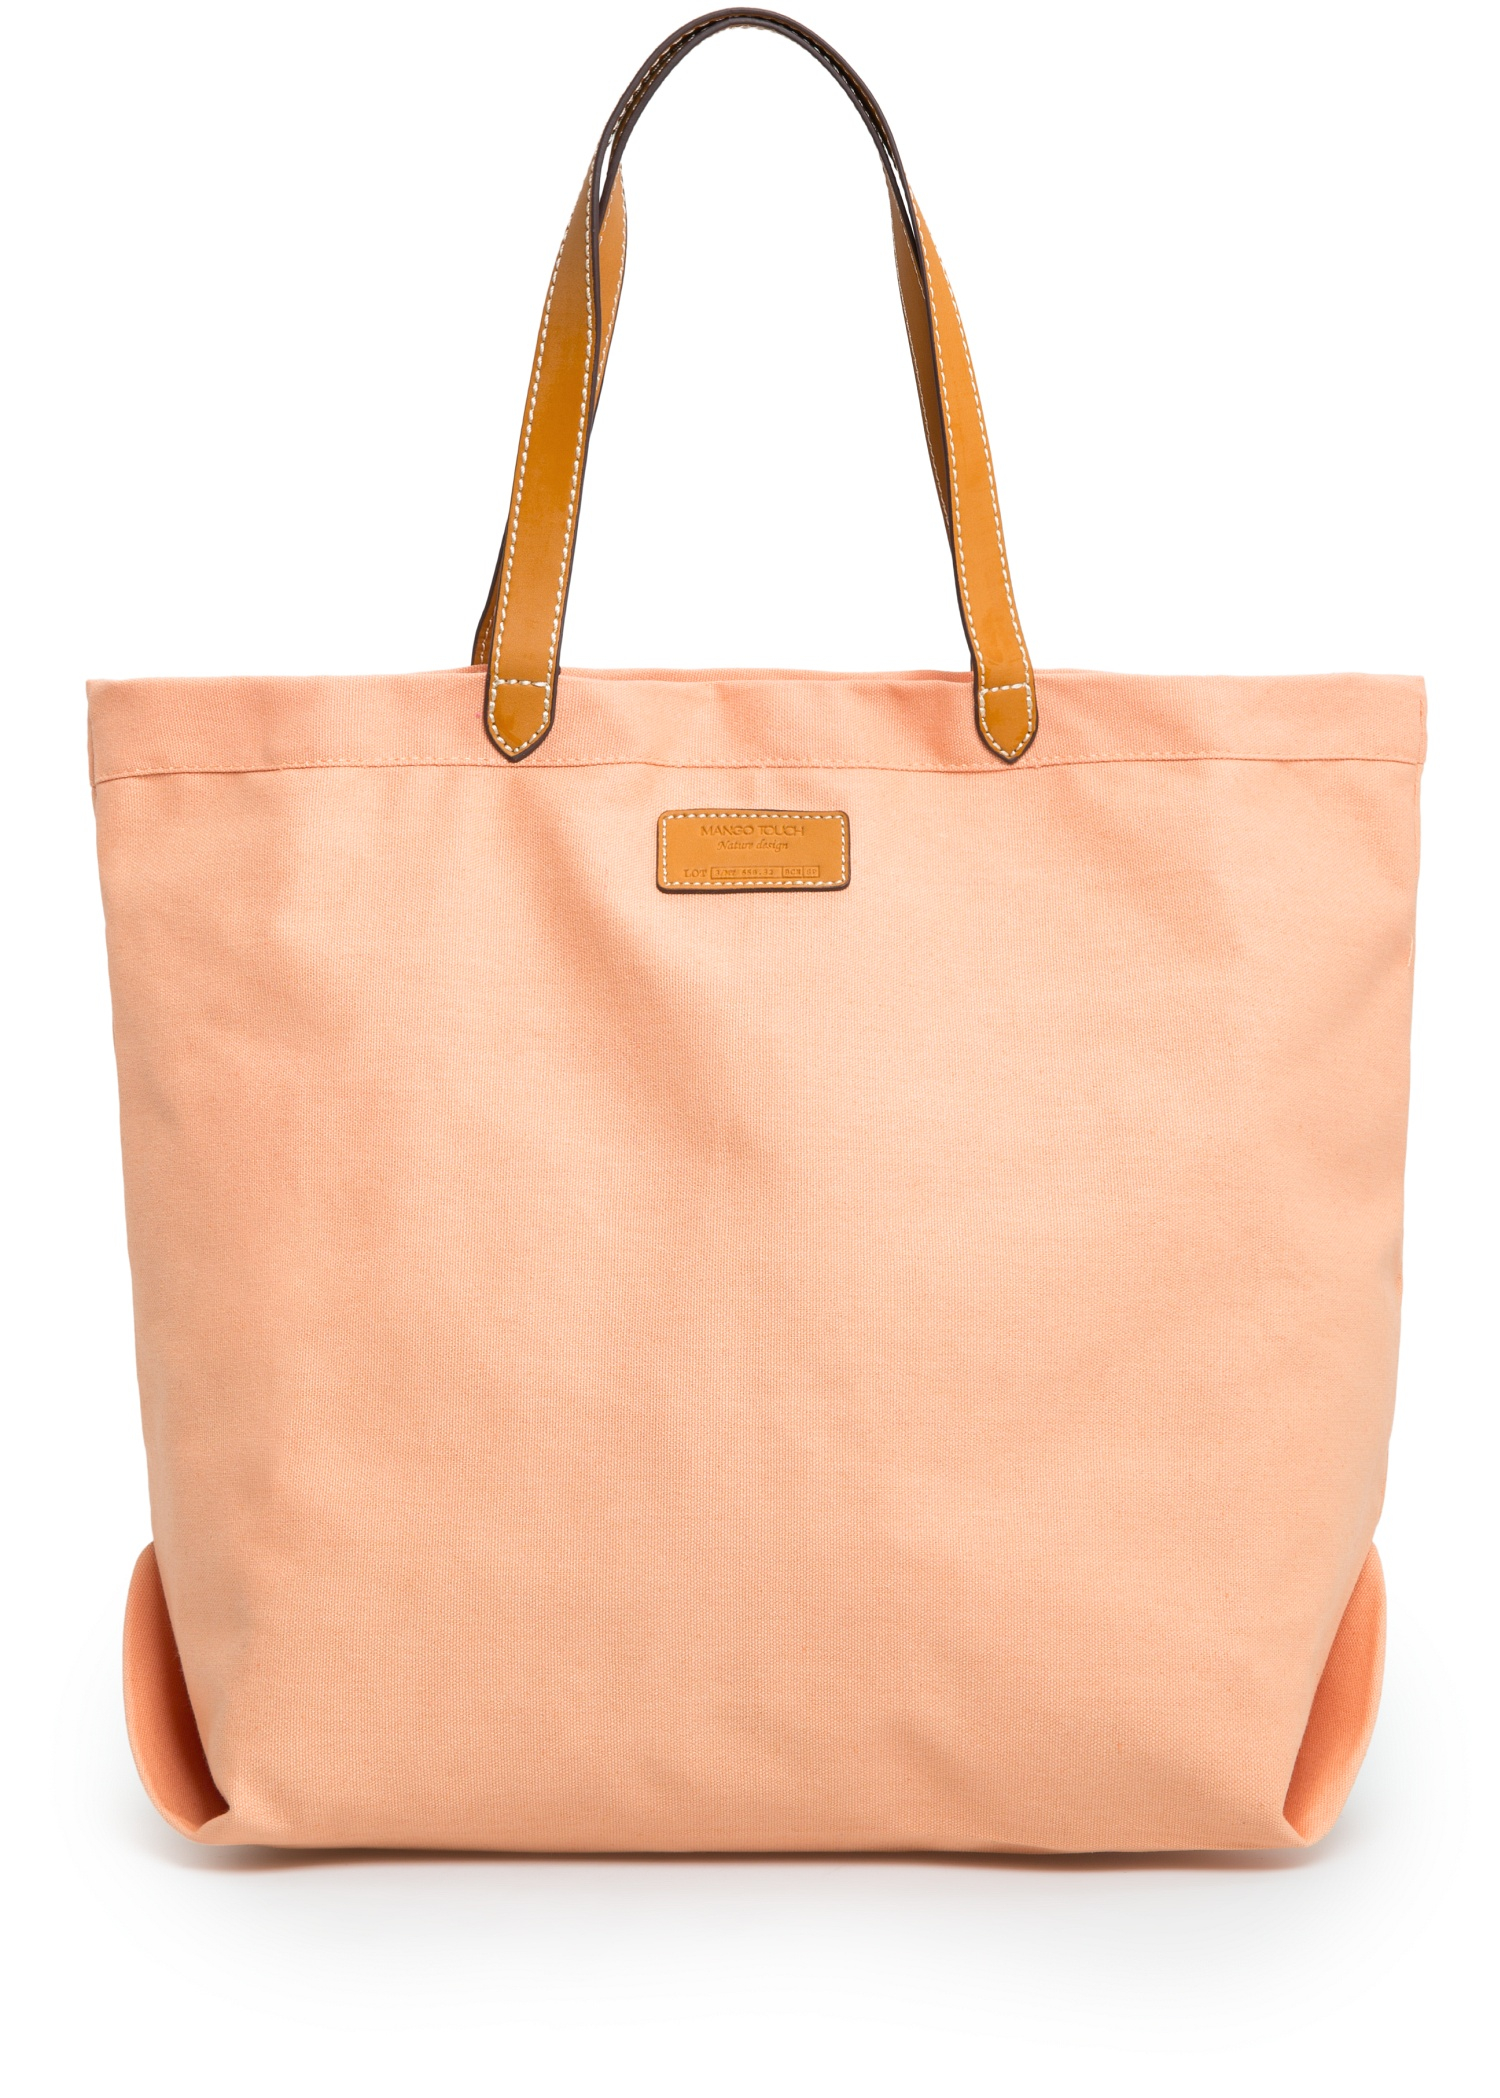 Mango Canvas Shopper Bag in Orange (Peach) | Lyst